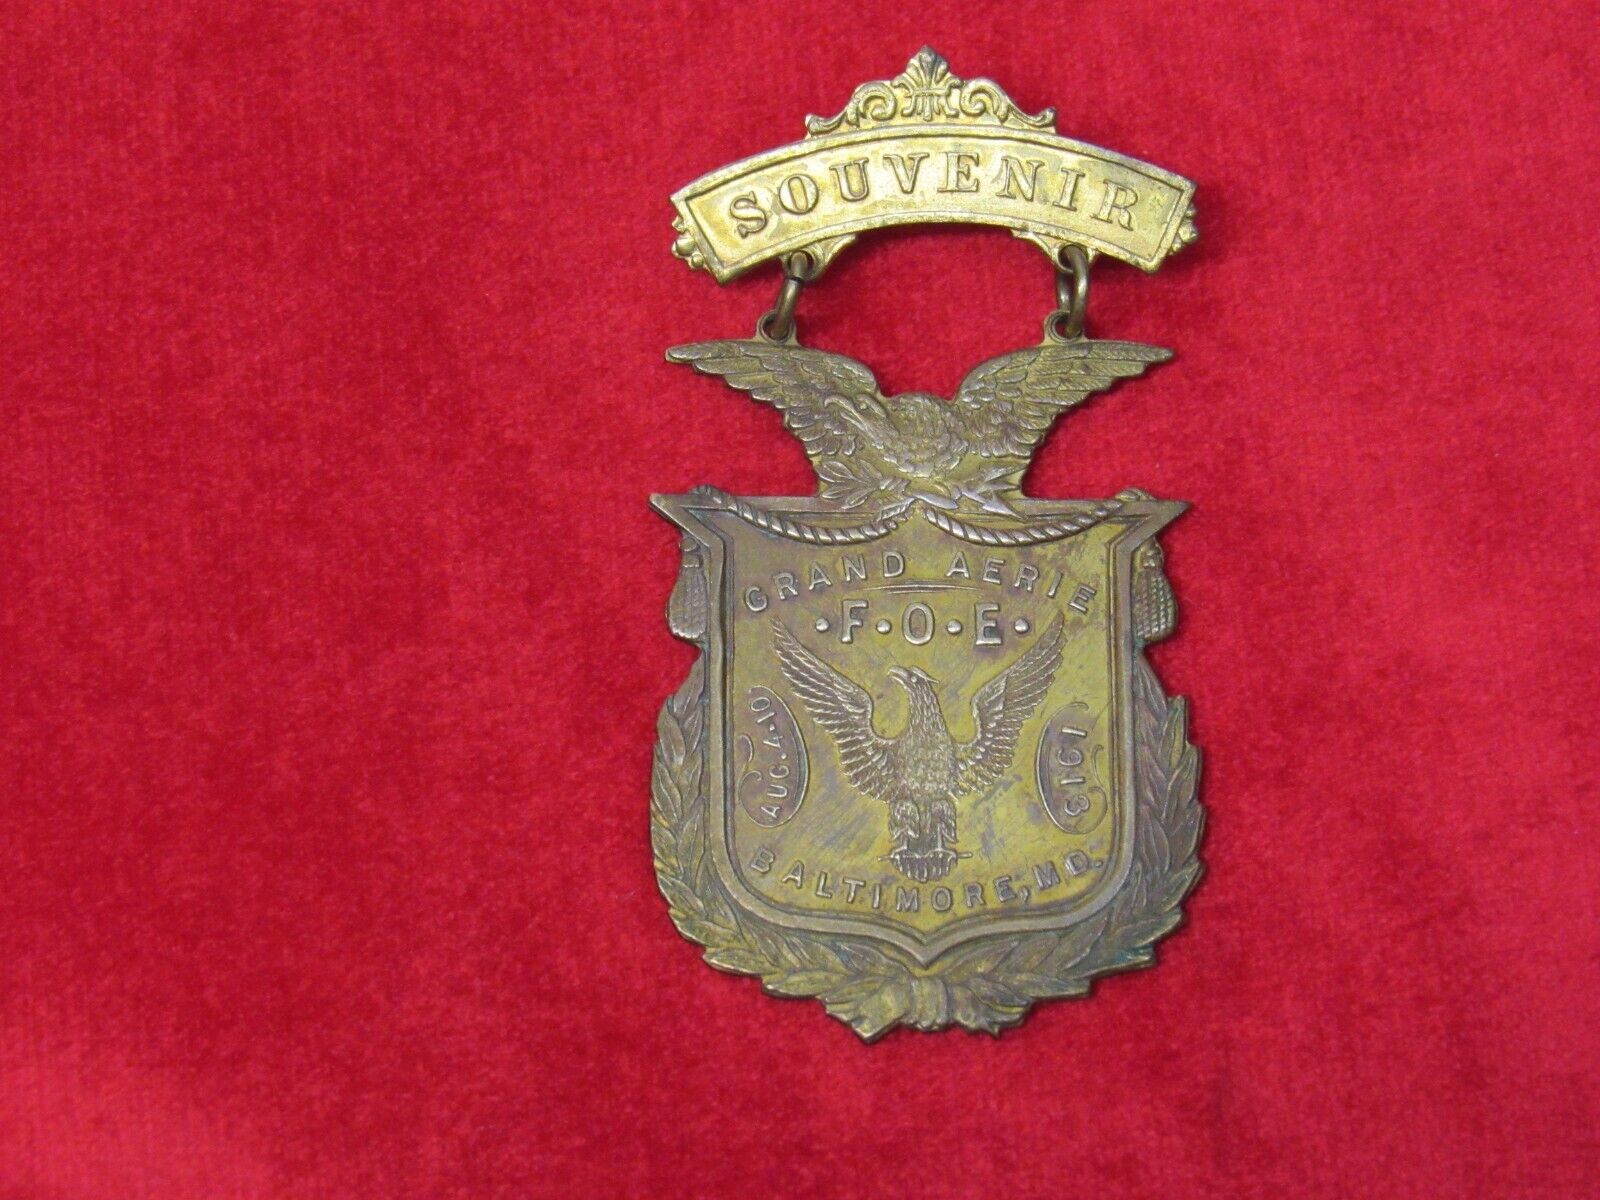 1913 Grand Aerie F.O.E. Fraternal Order Of Eagles Souvenir Badge Baltimore MD.